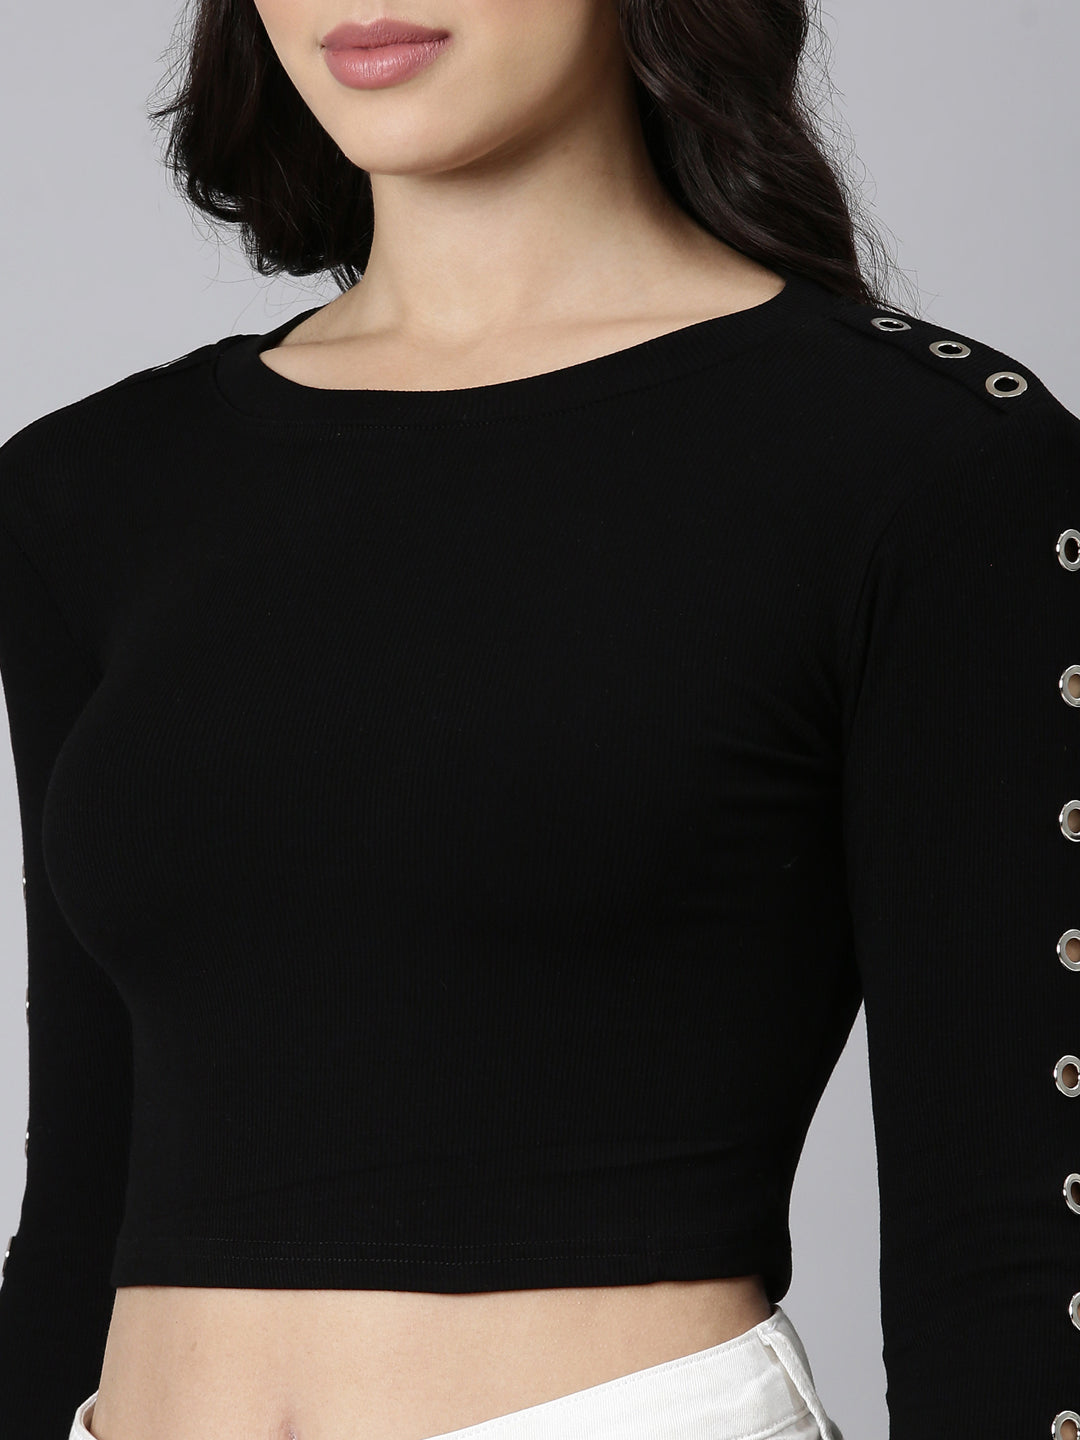 Women Embellished Black Crop Top